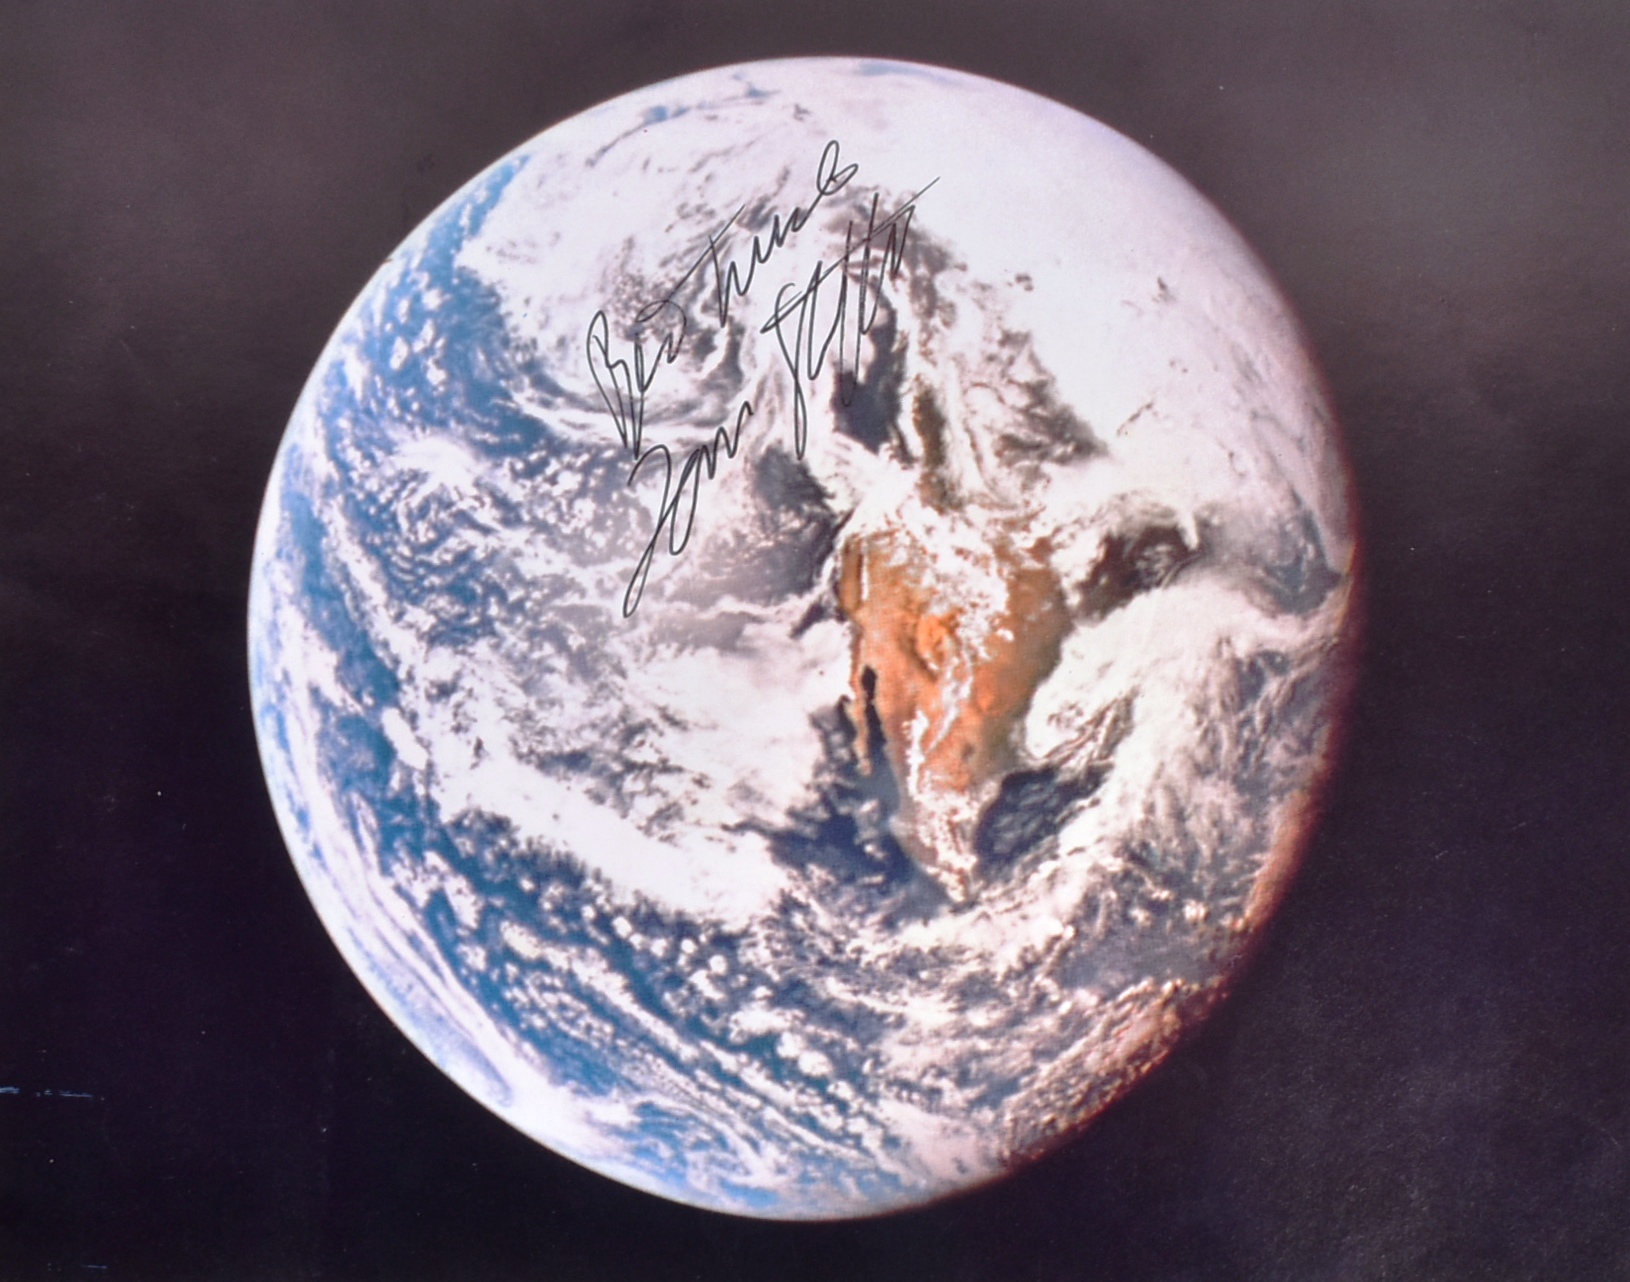 NASA ASTRONAUT - THOMAS P. STAFFORD - SIGNED 8X10" PHOTOGRAPHS - Image 4 of 6